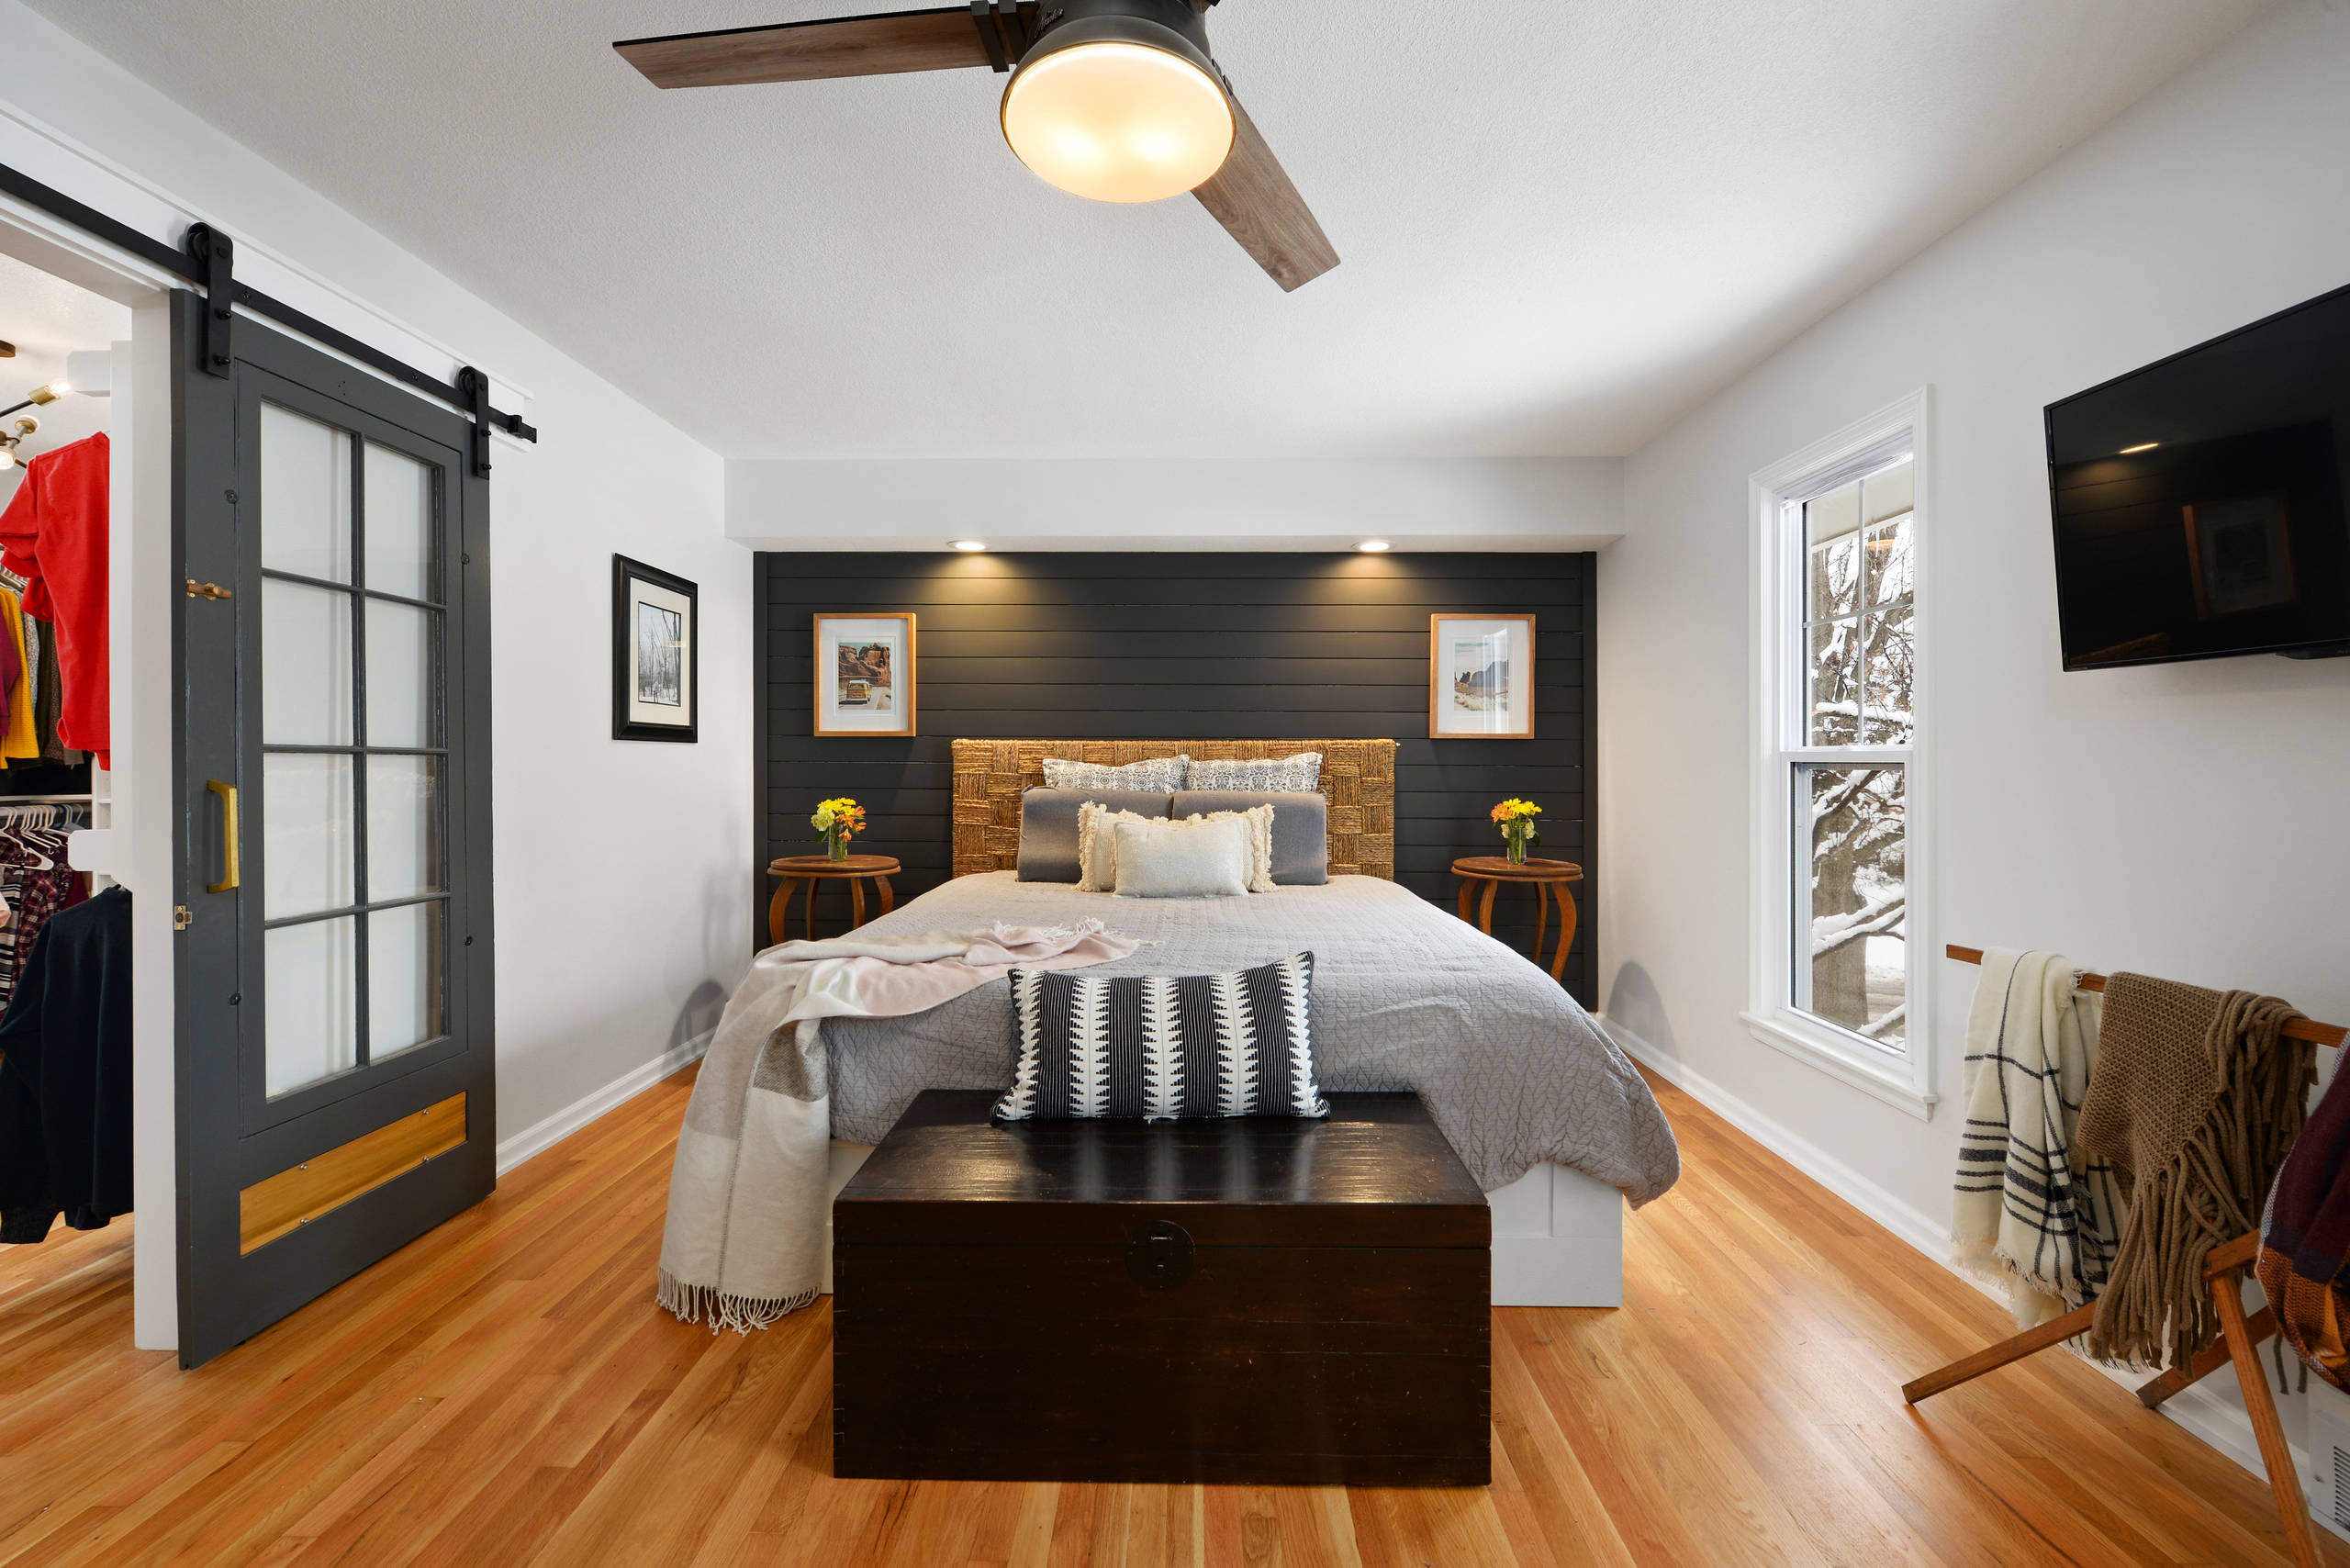 75 Brown Floor Bedroom Ideas You Ll